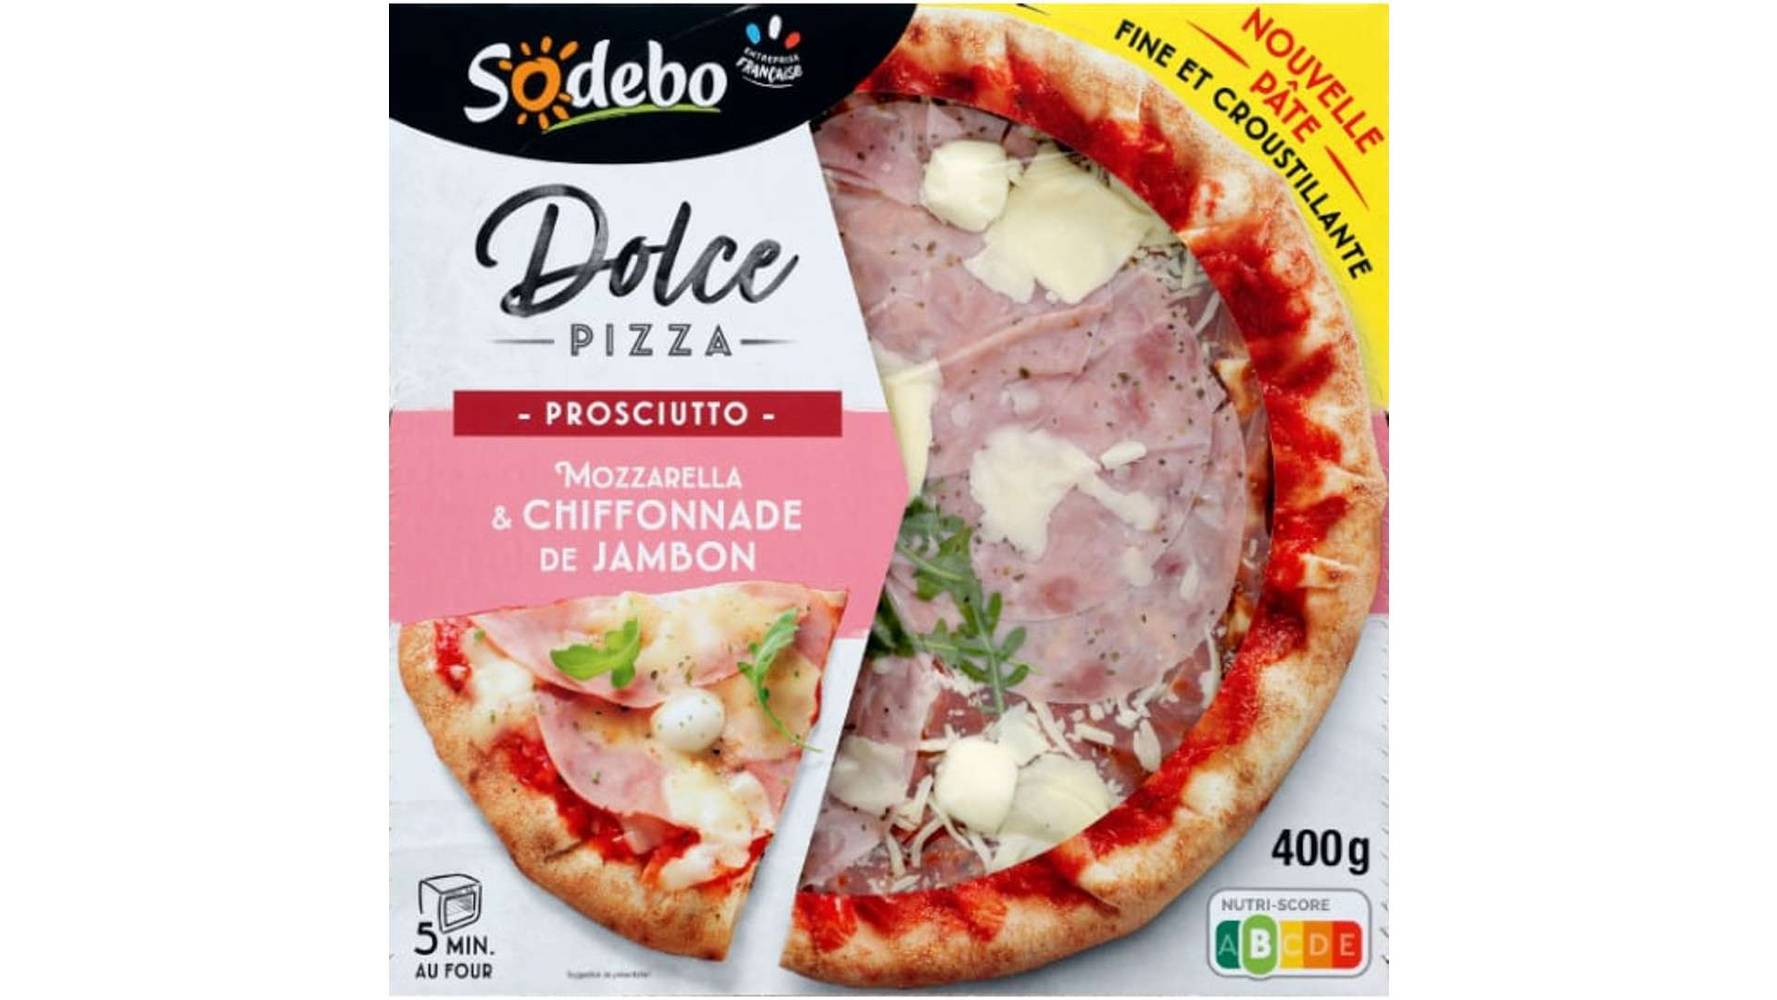 Sodebo - Dolce pizza prosciutto